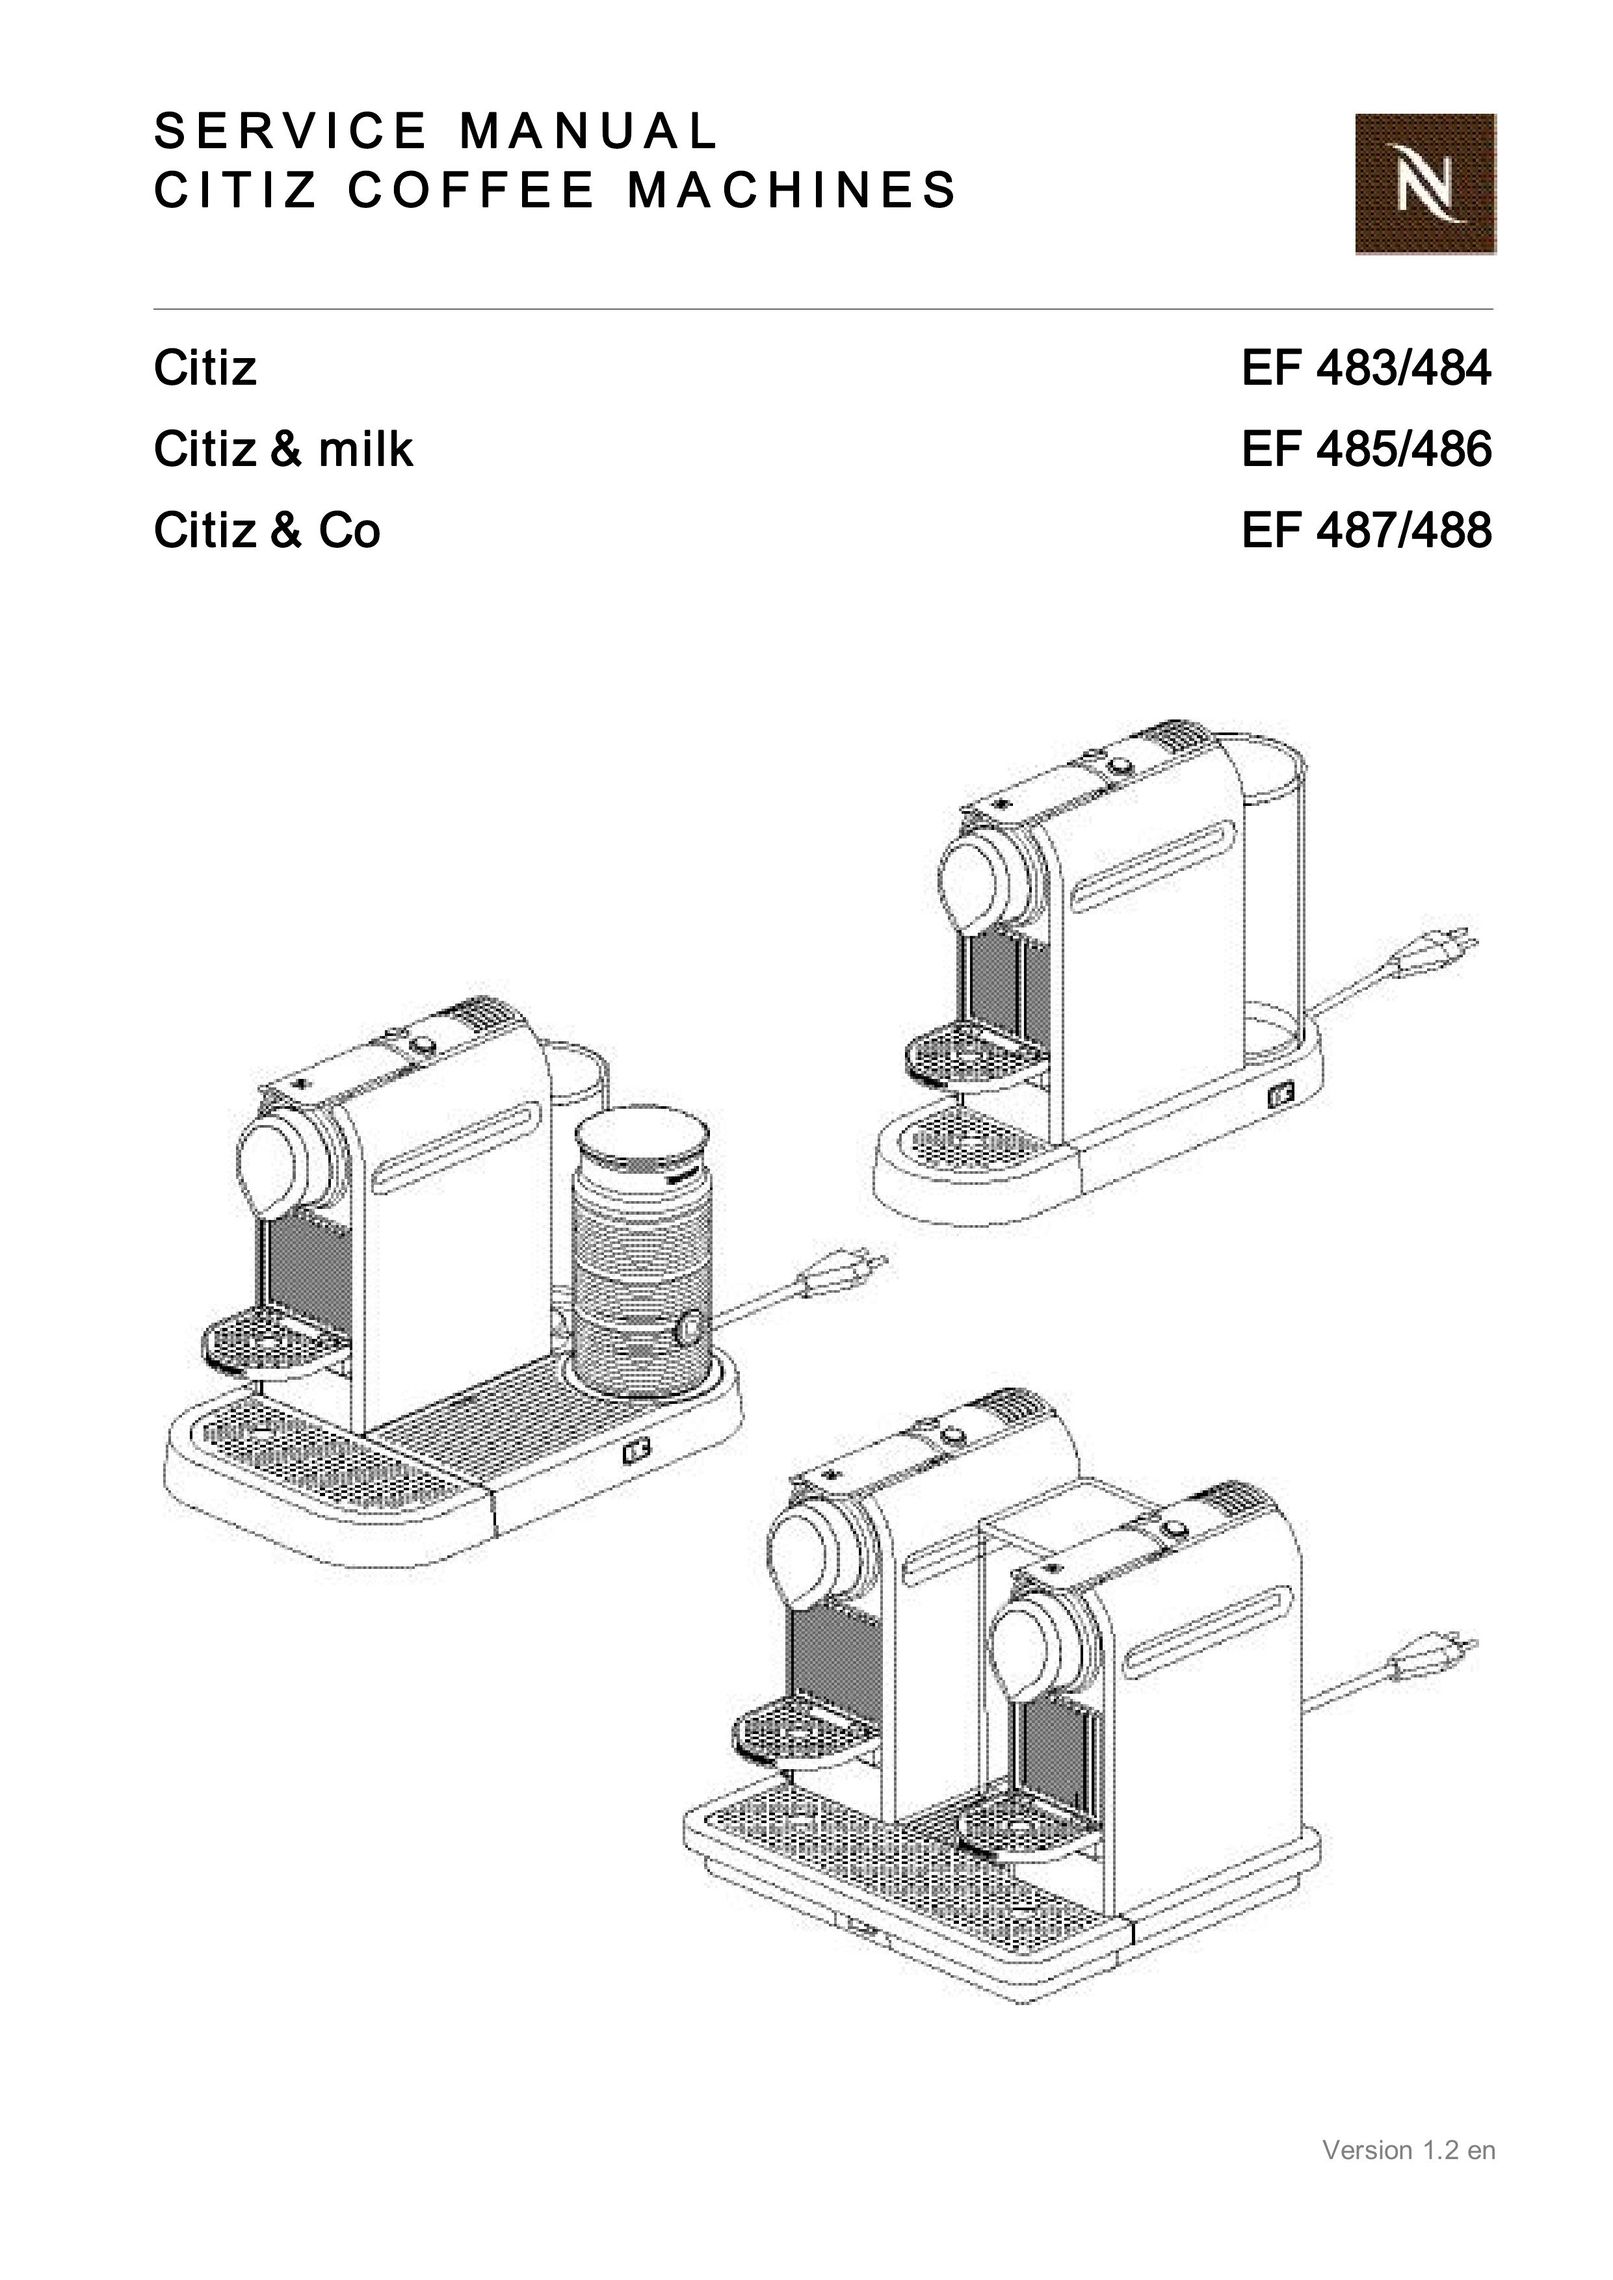 Nespresso EF483/484 Coffeemaker User Manual